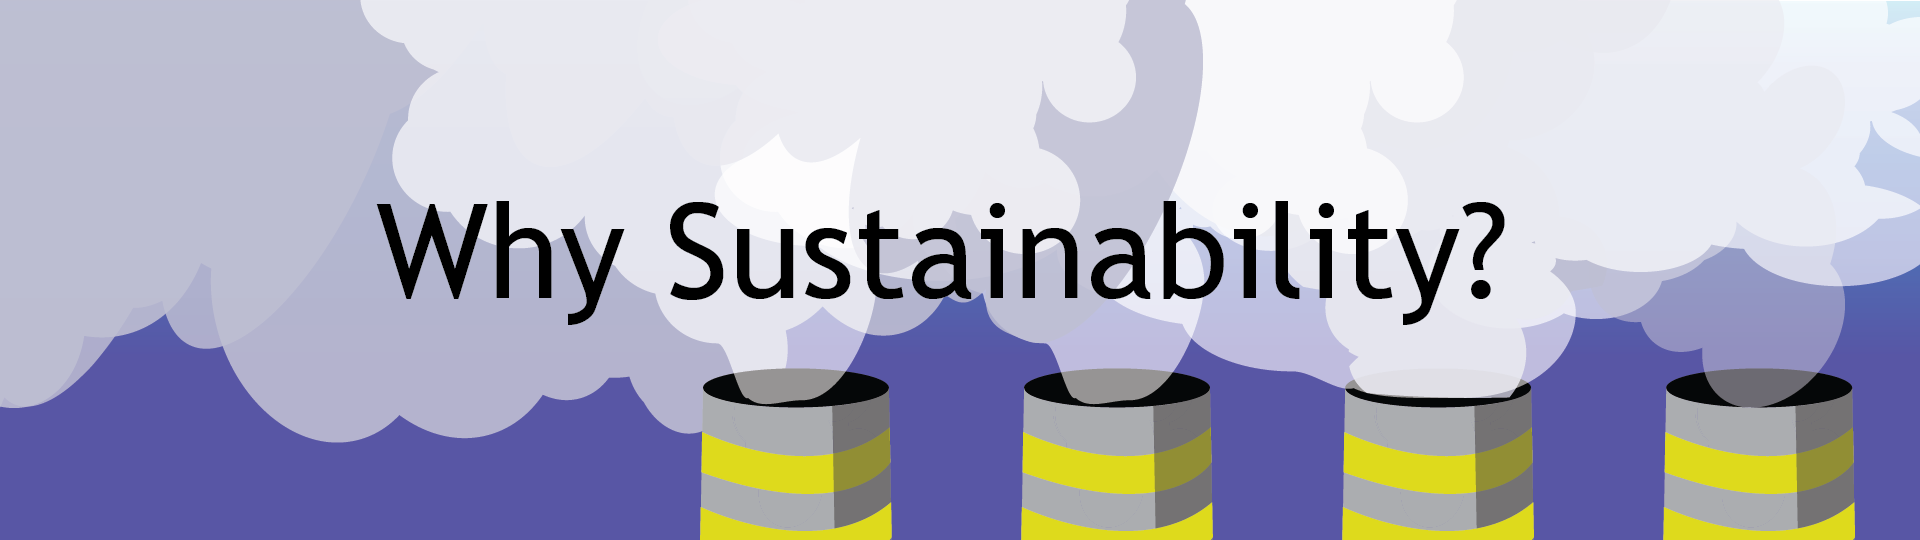 Why Sustainability